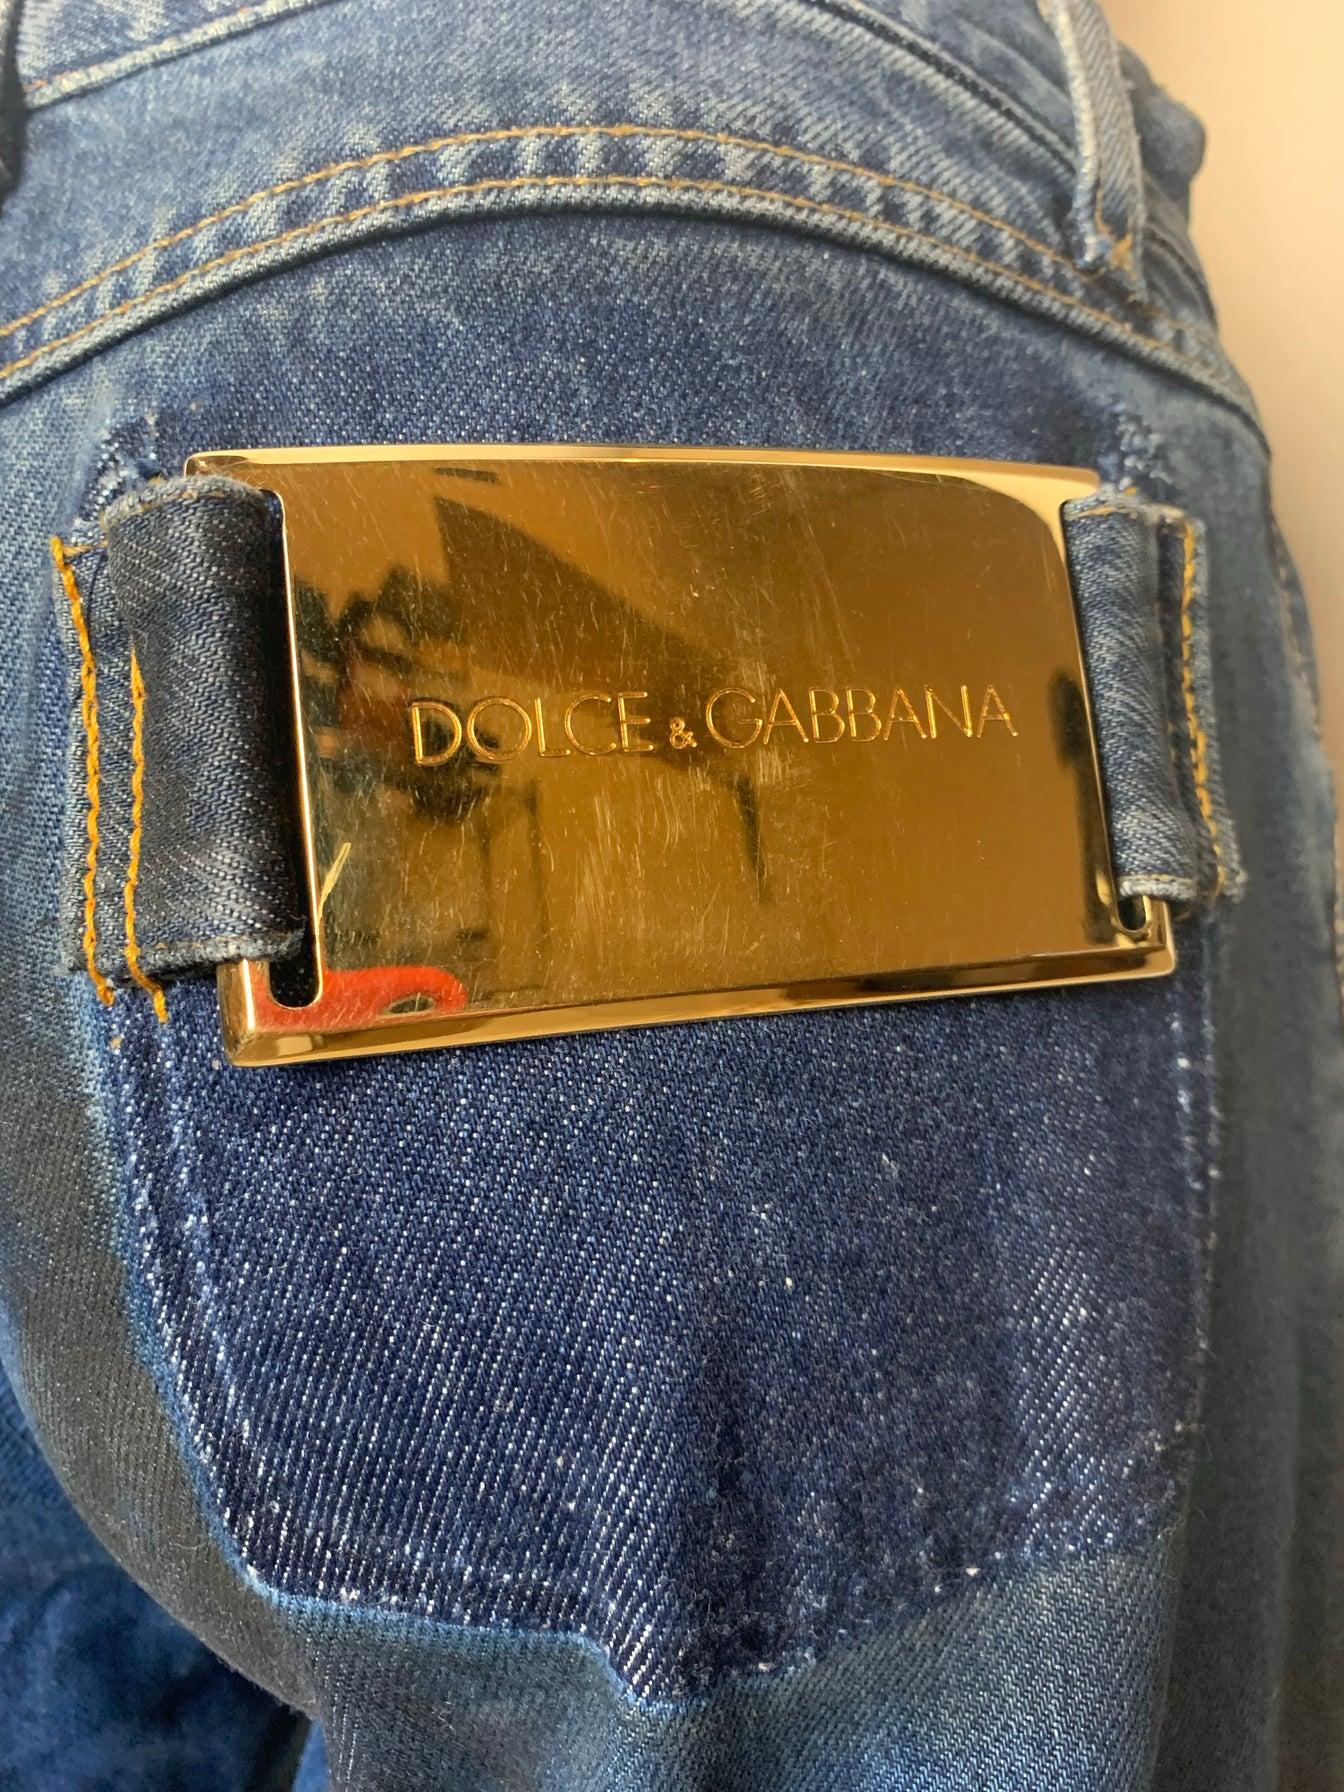 Dolce & Gabbana SS 2001 Graffiti Punk Jeans with Safety Pins 1